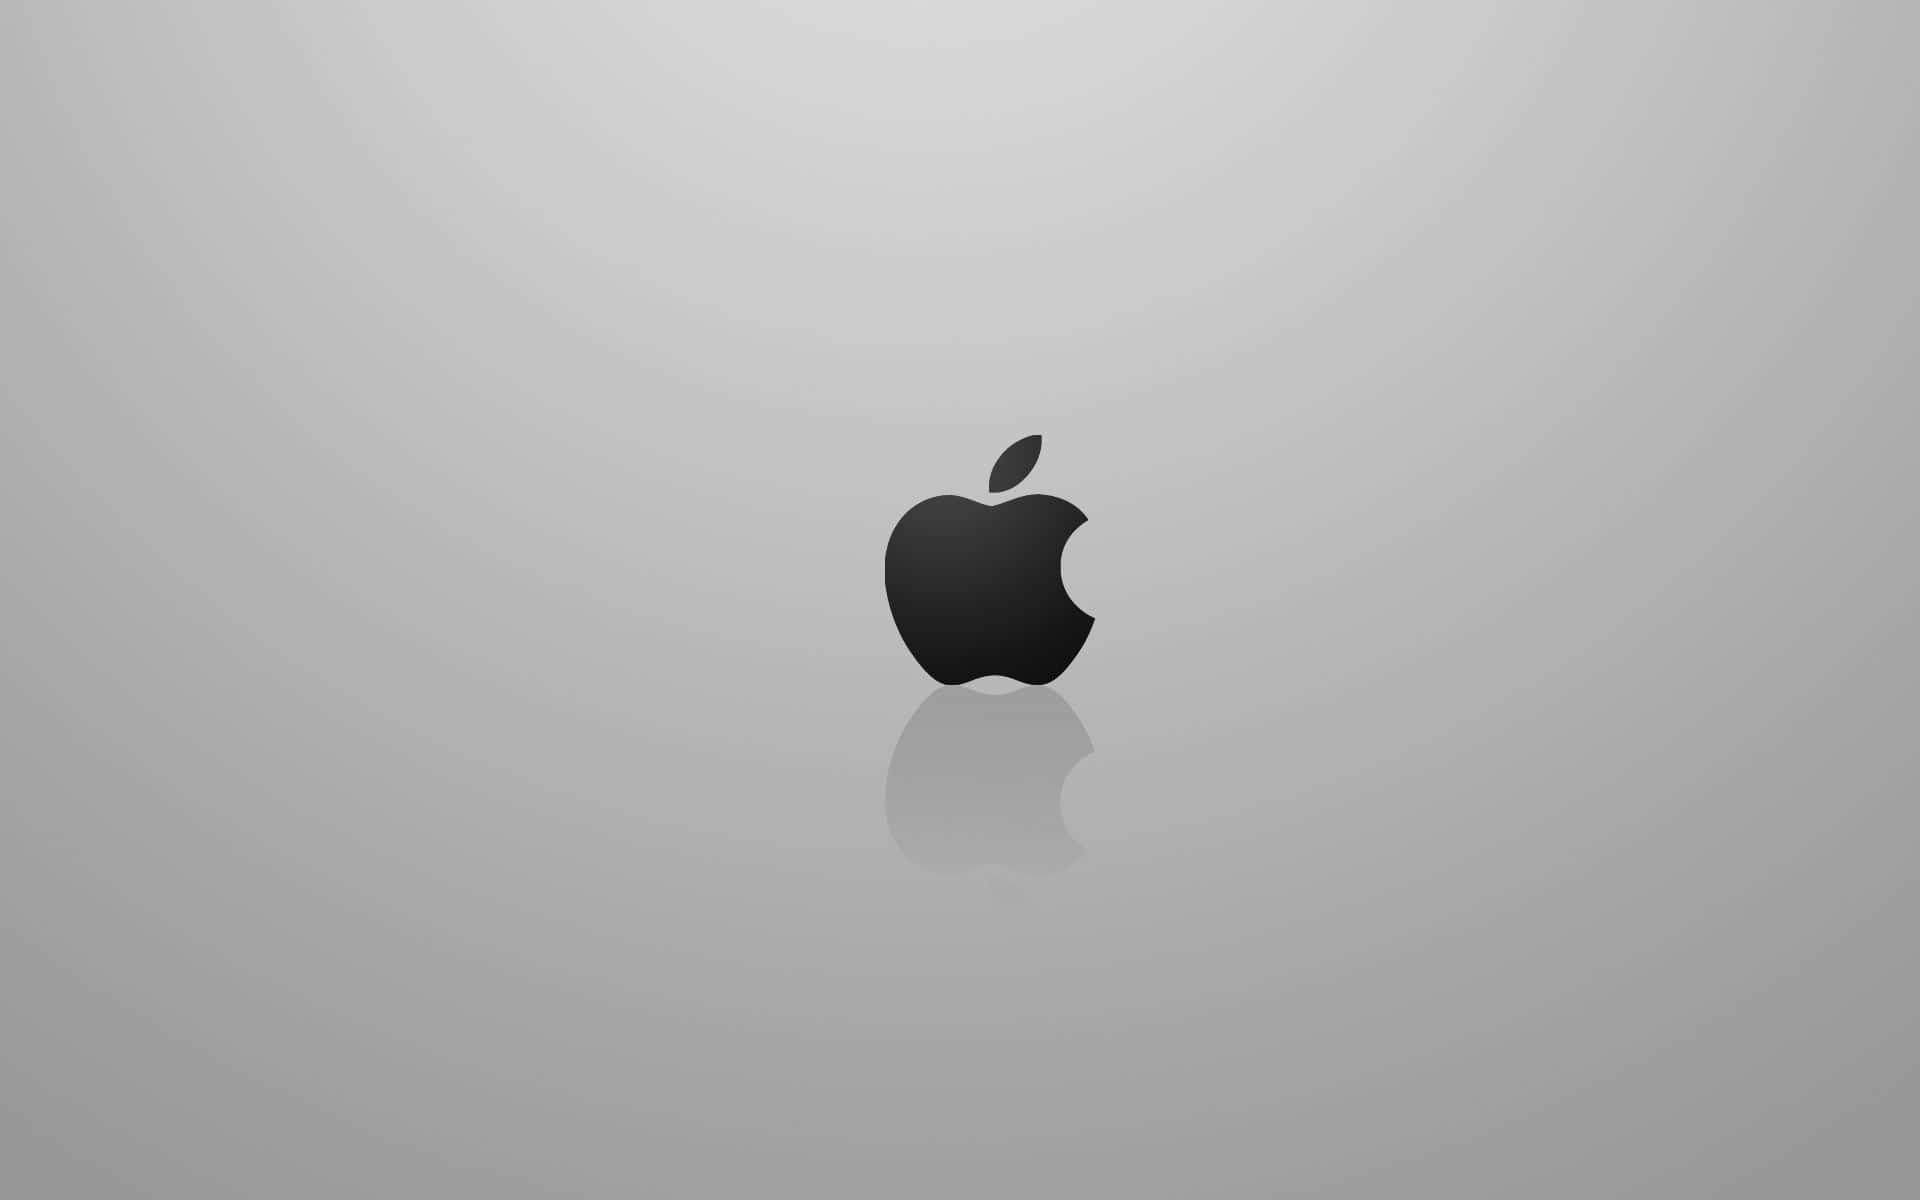 Apple Mac Desktop Reflective Surface Background